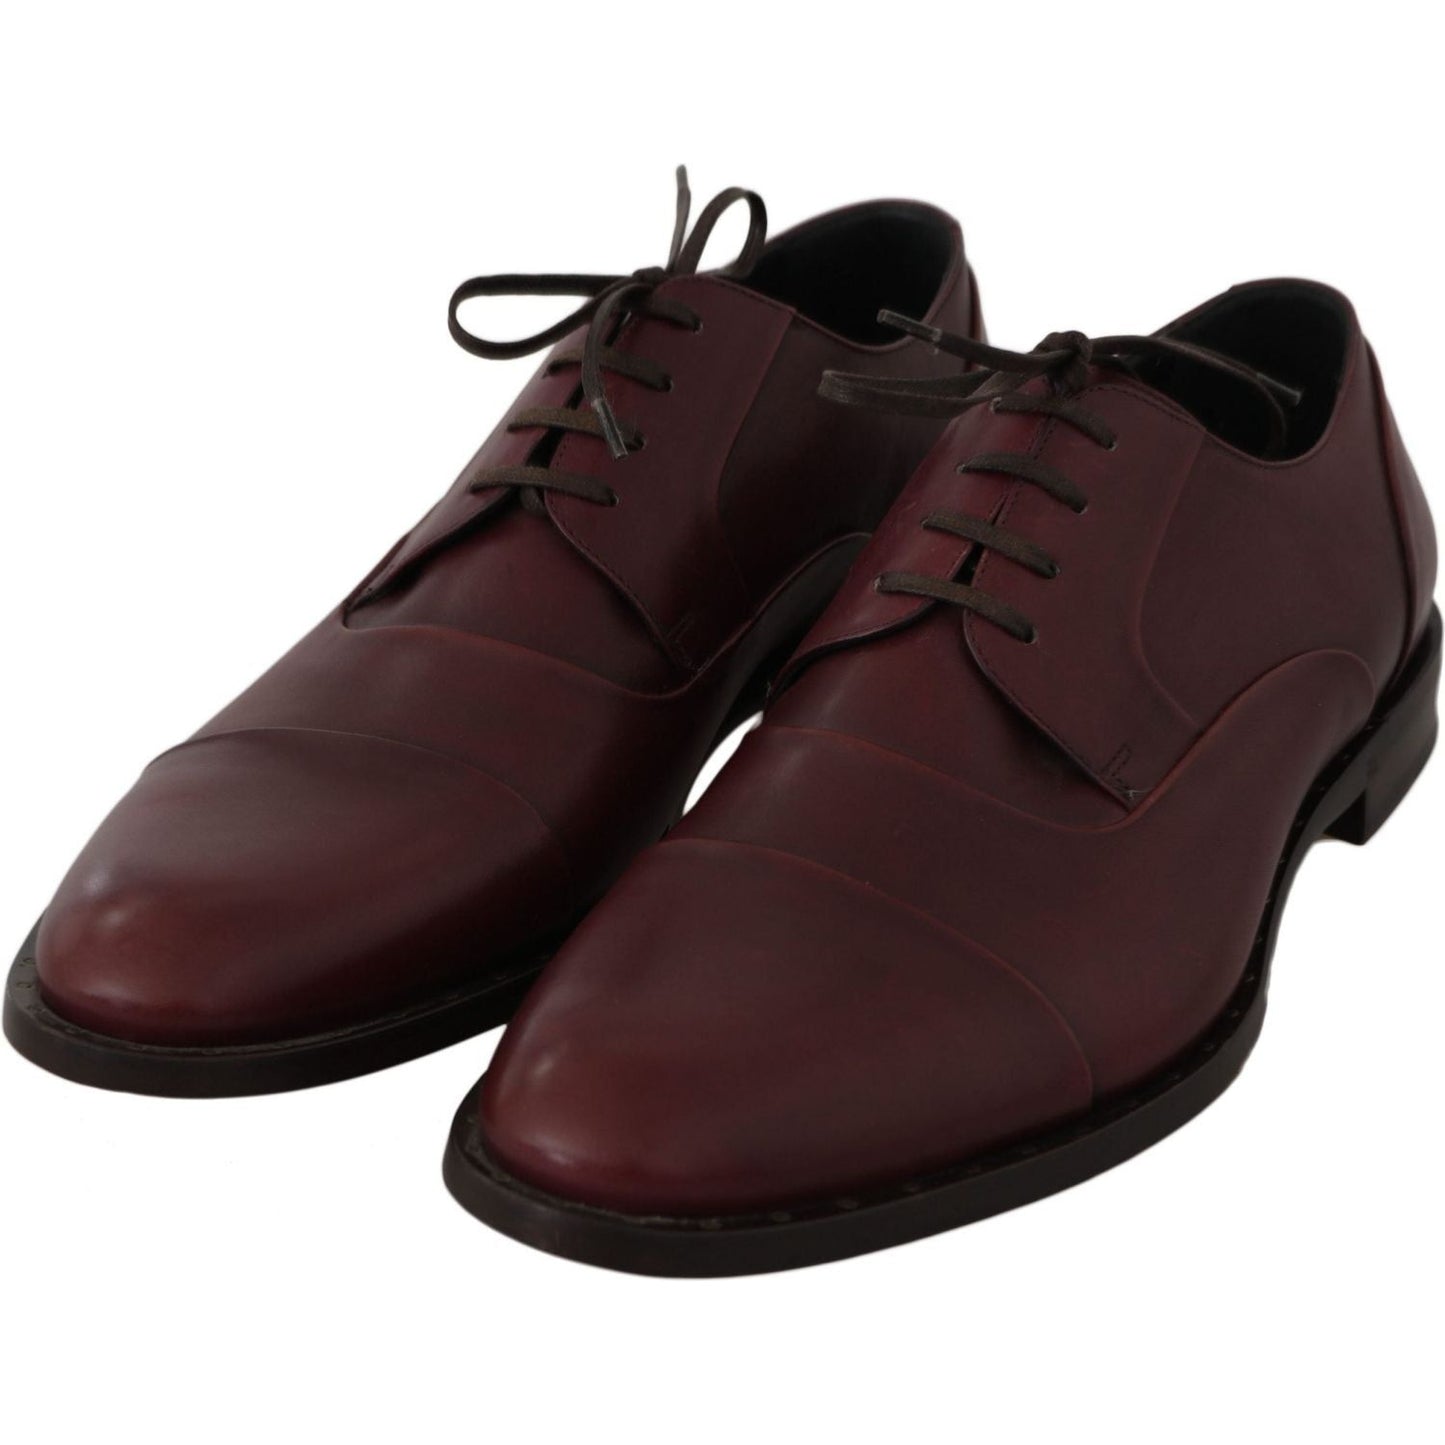 Dolce & Gabbana Elegant Bordeaux Leather Dress Shoes red-bordeaux-leather-derby-formal-shoes